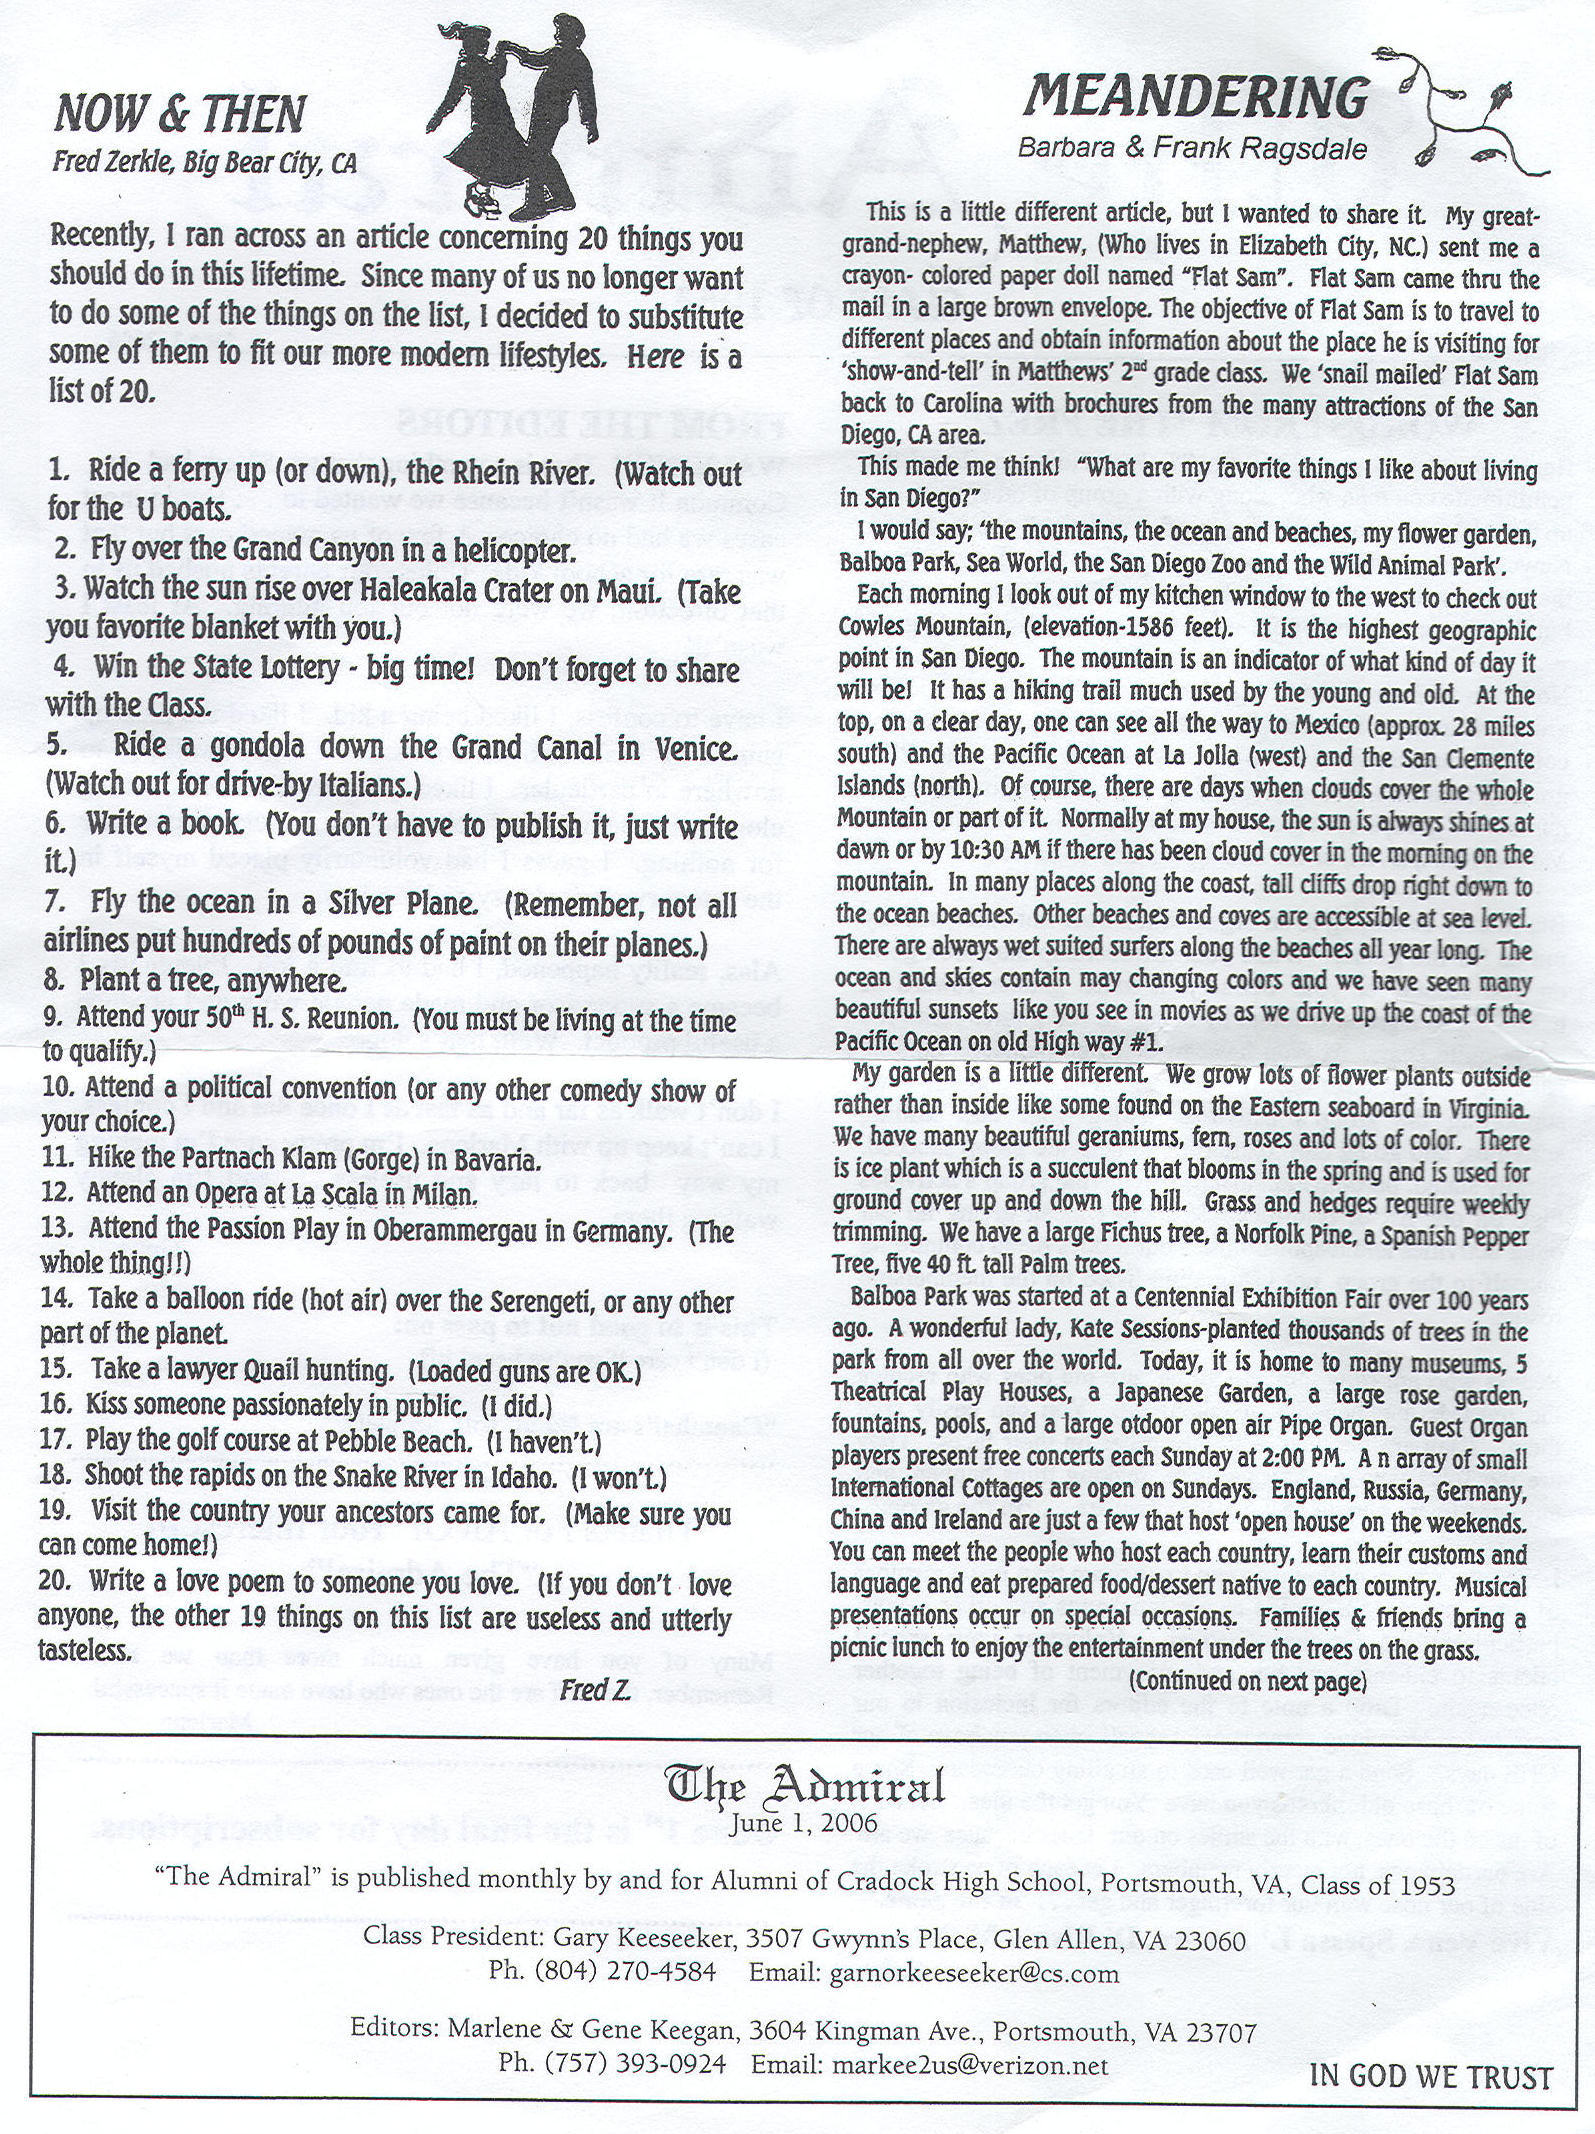 The Admiral -Jun 2006-pg. 2